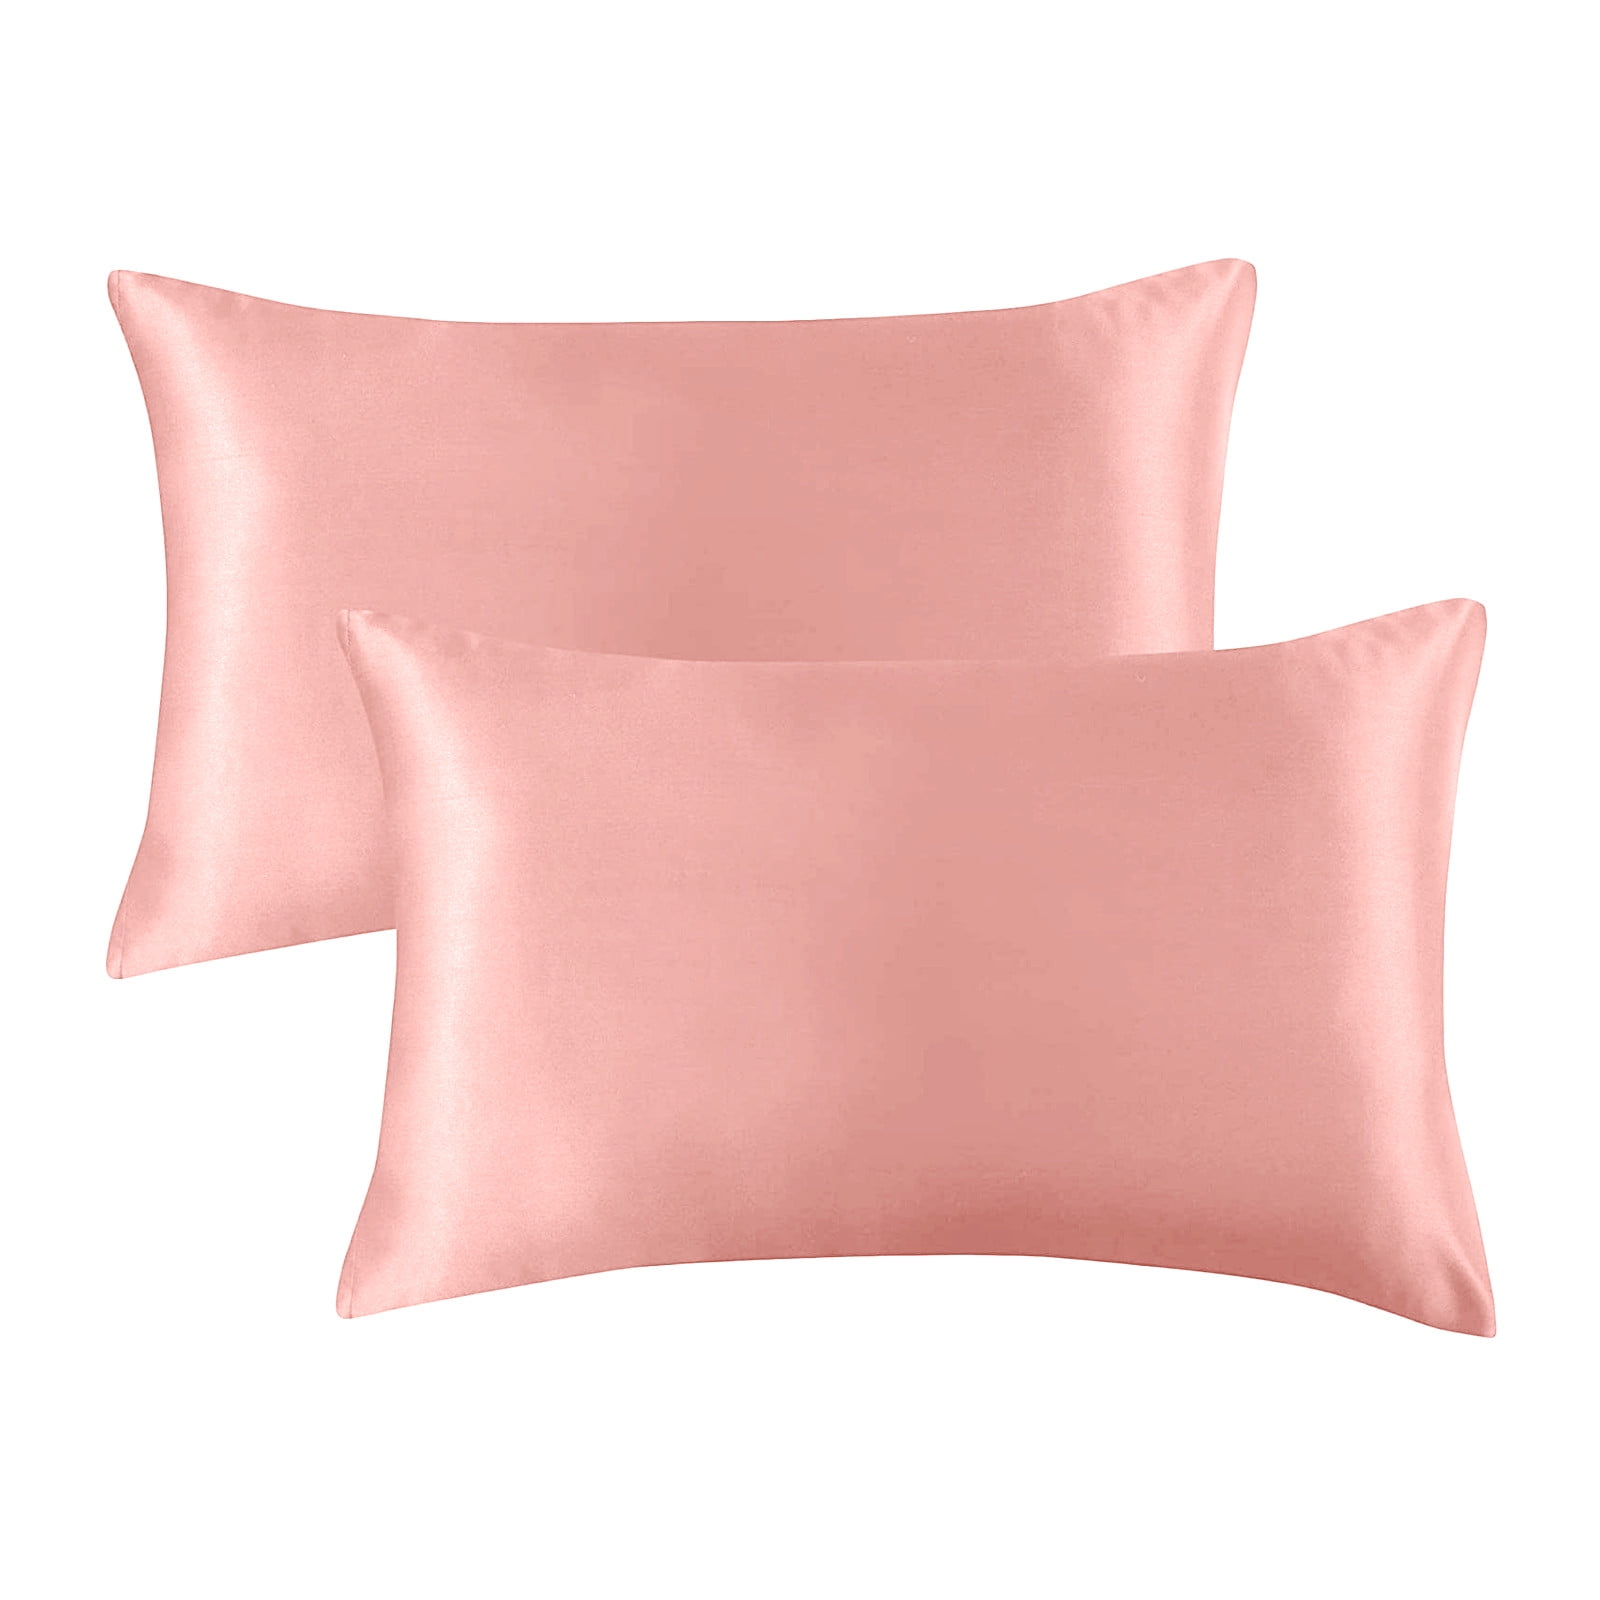 Extra Standard-Size Pillowcase